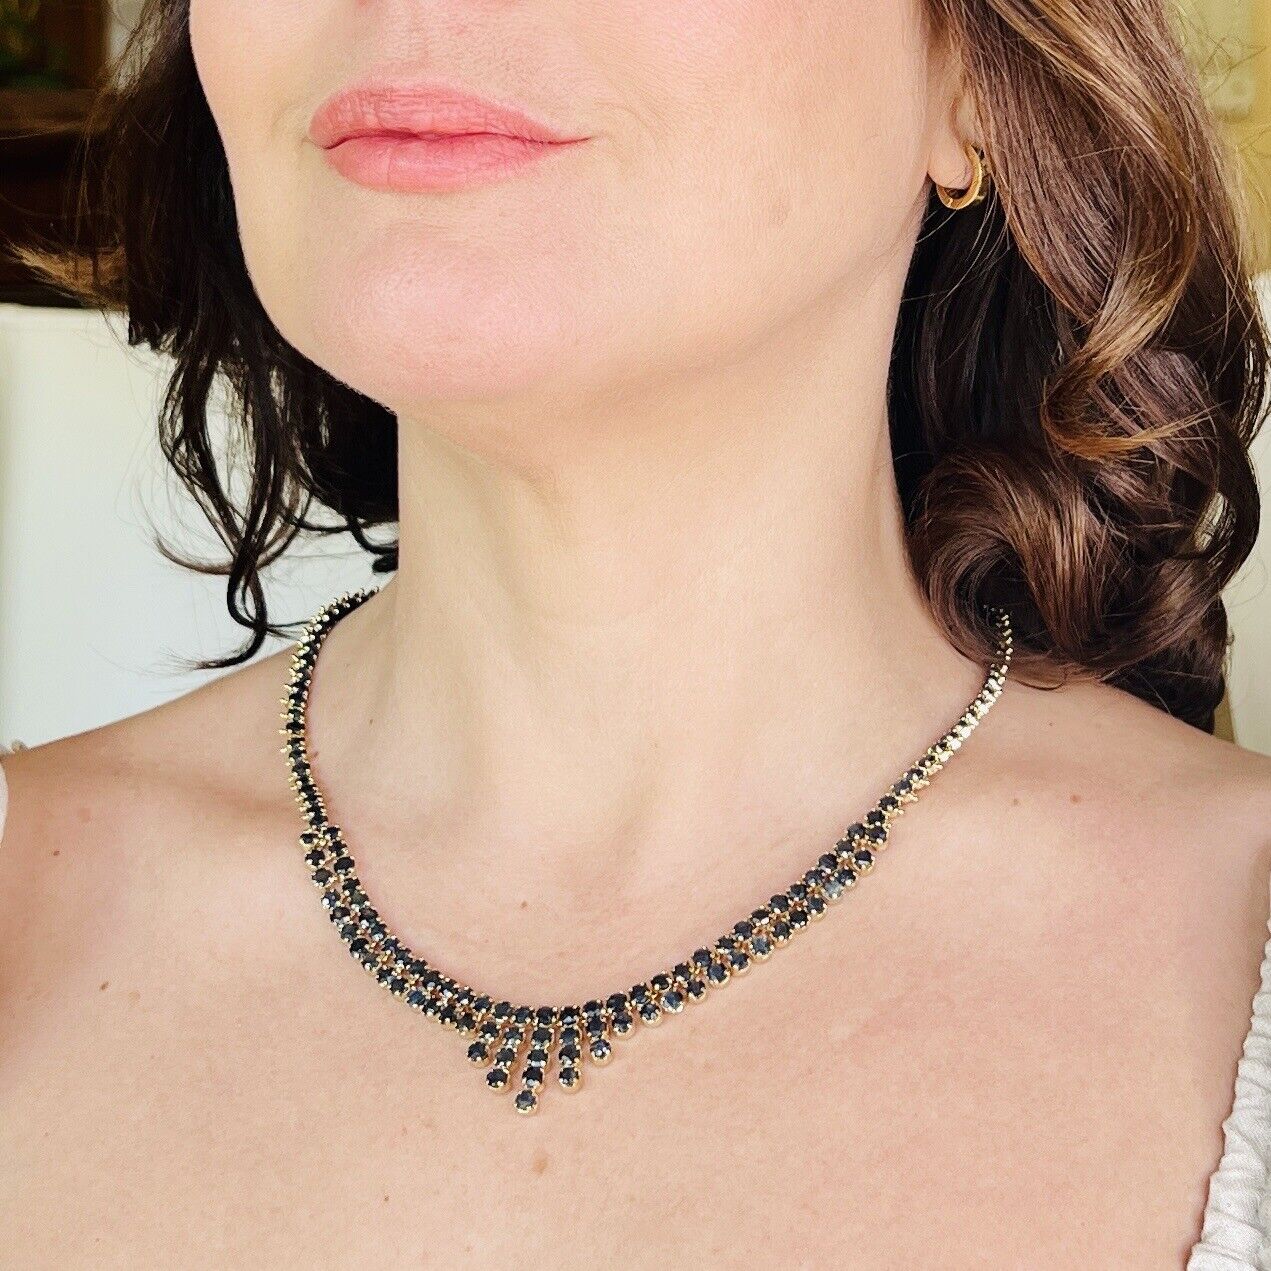 Genuine Sapphire "Cleopatra" Necklace, New 19"